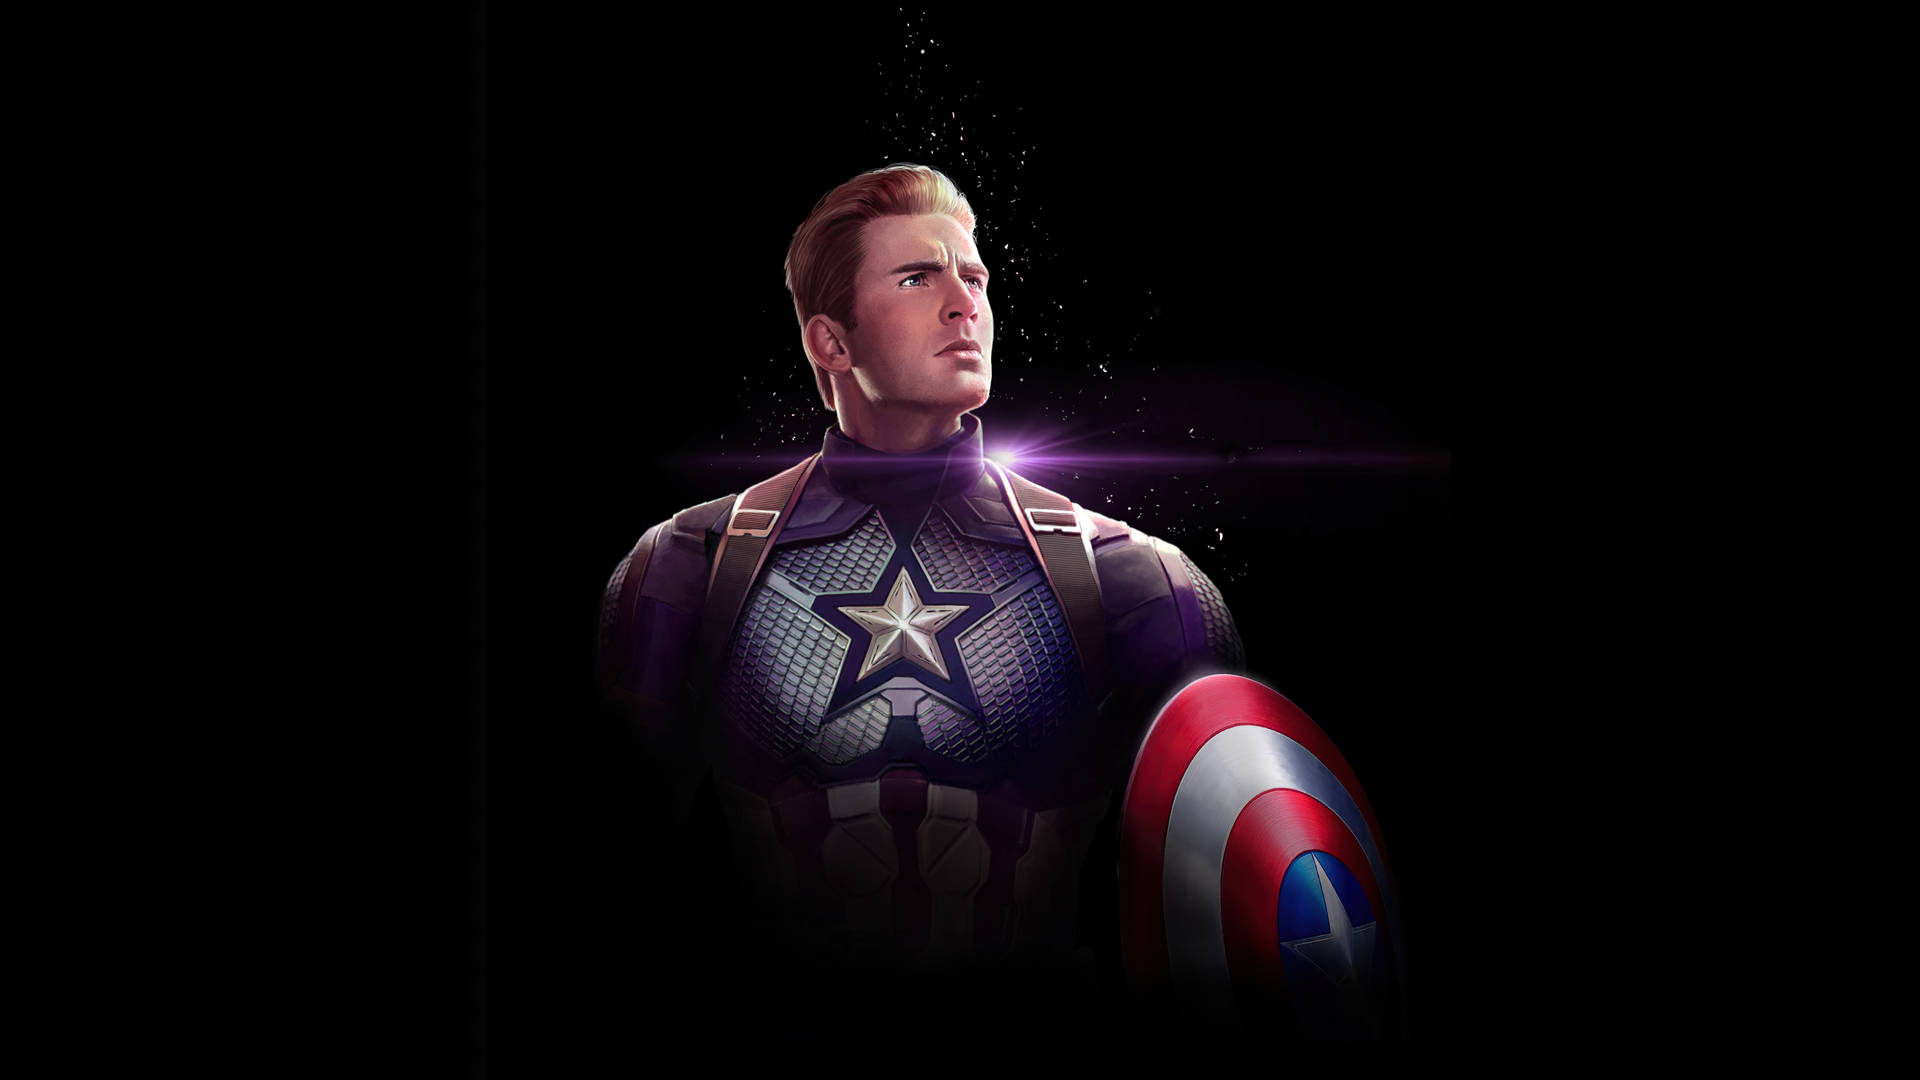 Download Captain America Superhero Avengers Endgame Wallpaper | Wallpapers .com